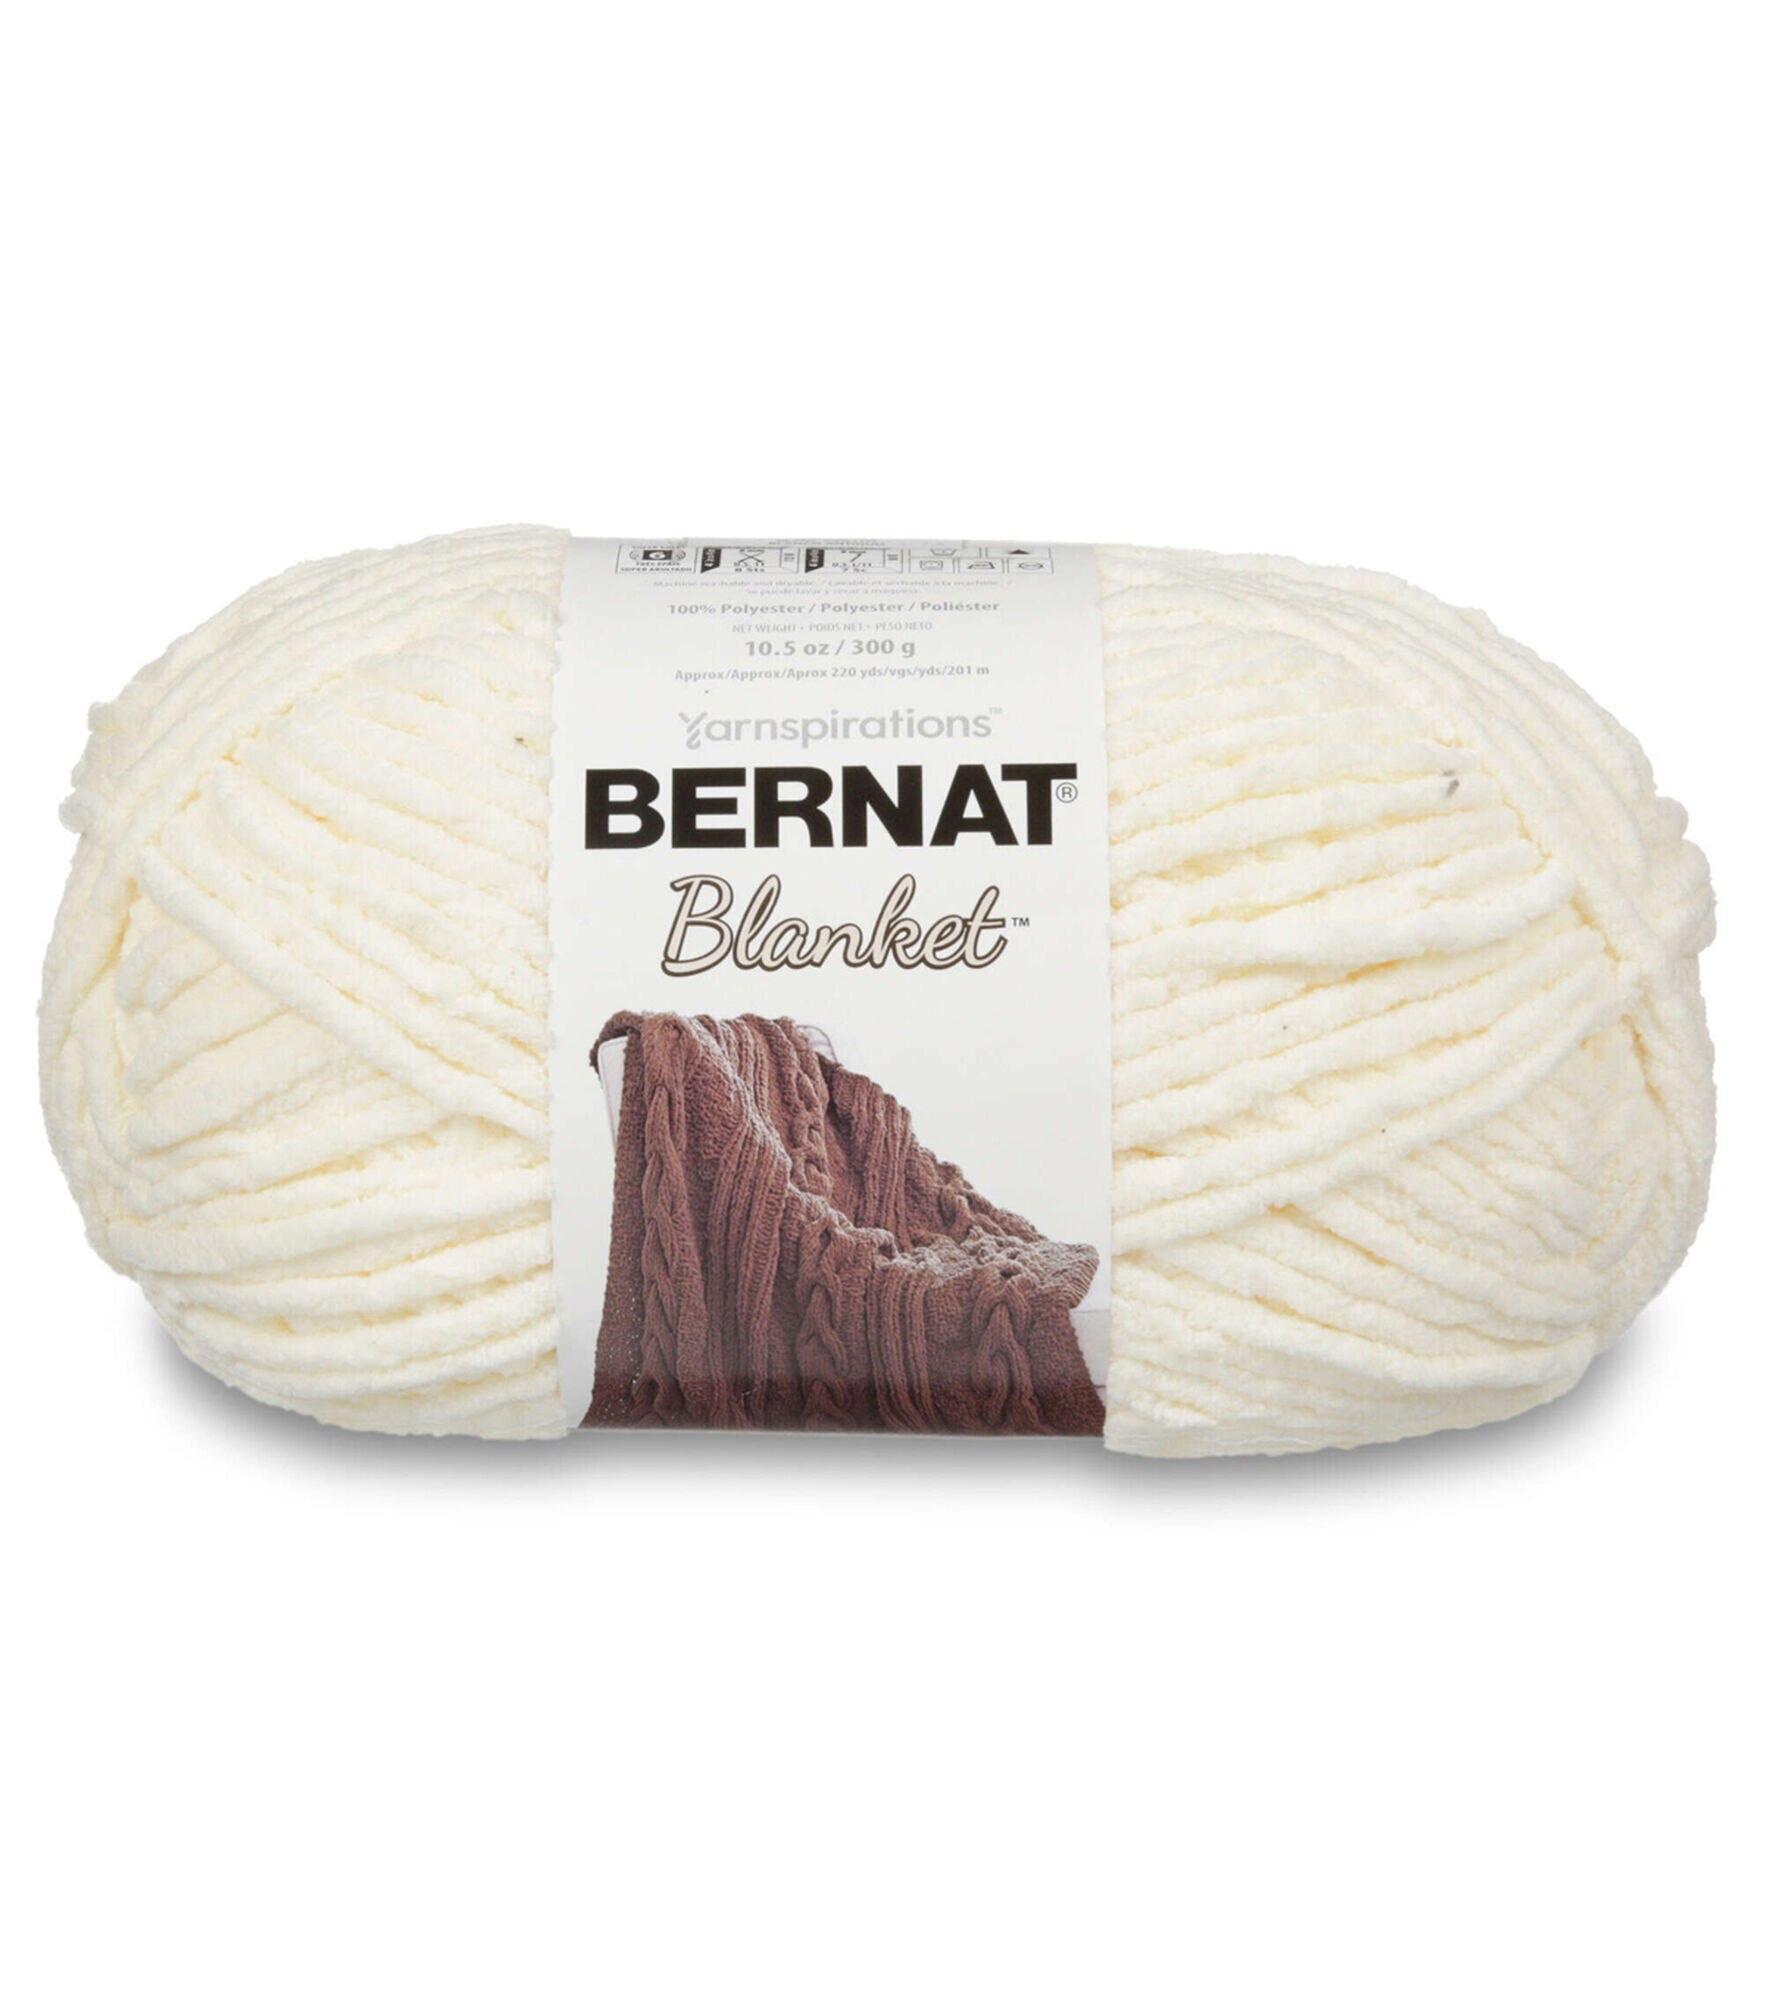 Bernat Big Blanket Yarn